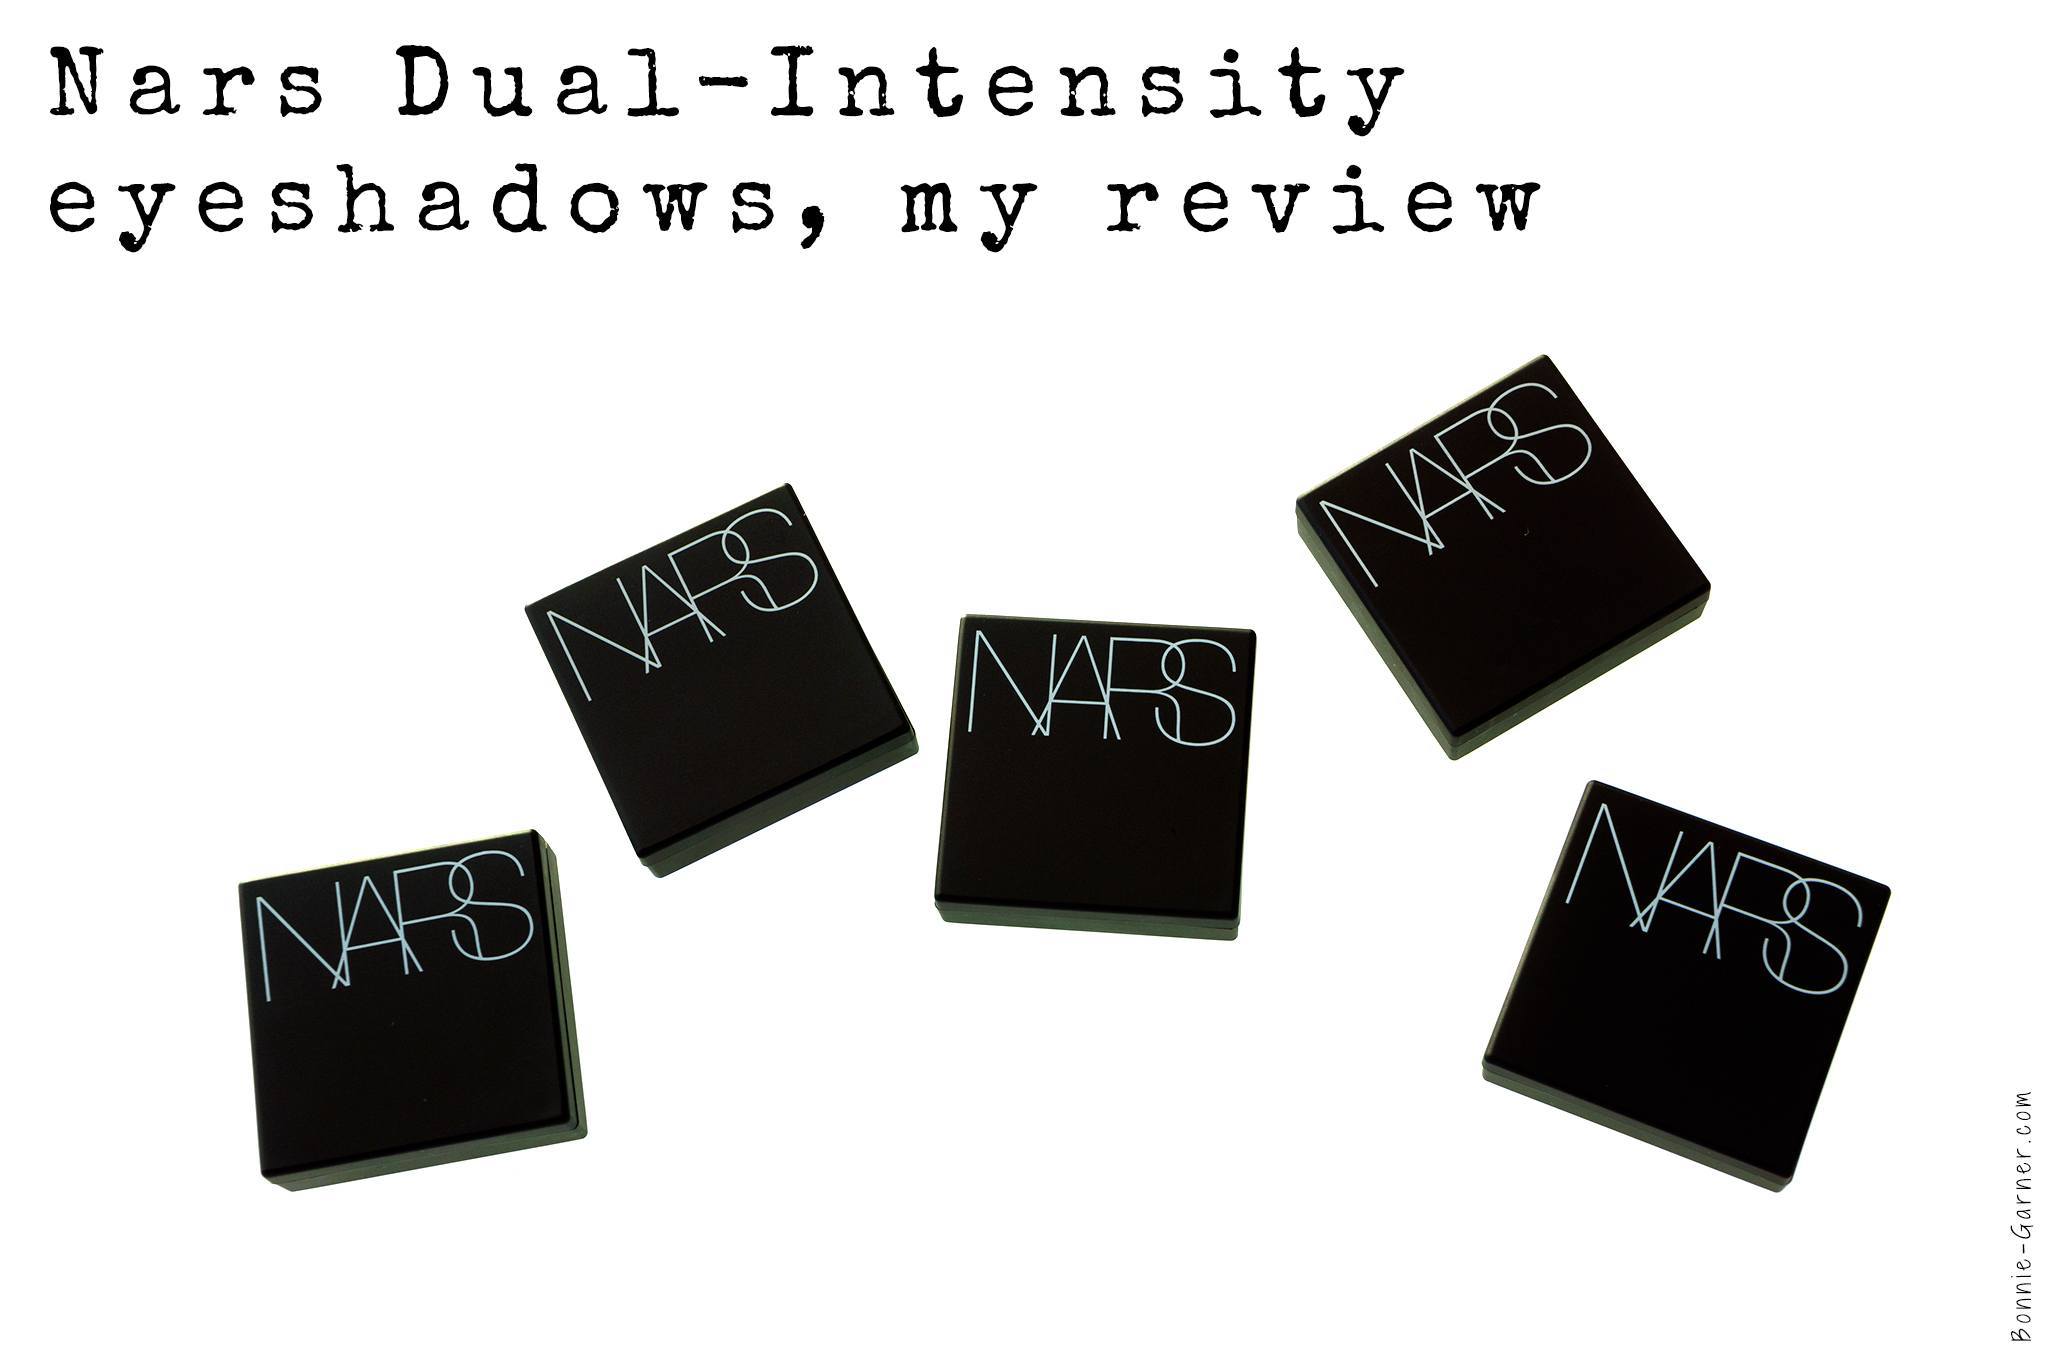 Nars Dual-Intensity eyeshadows, my review